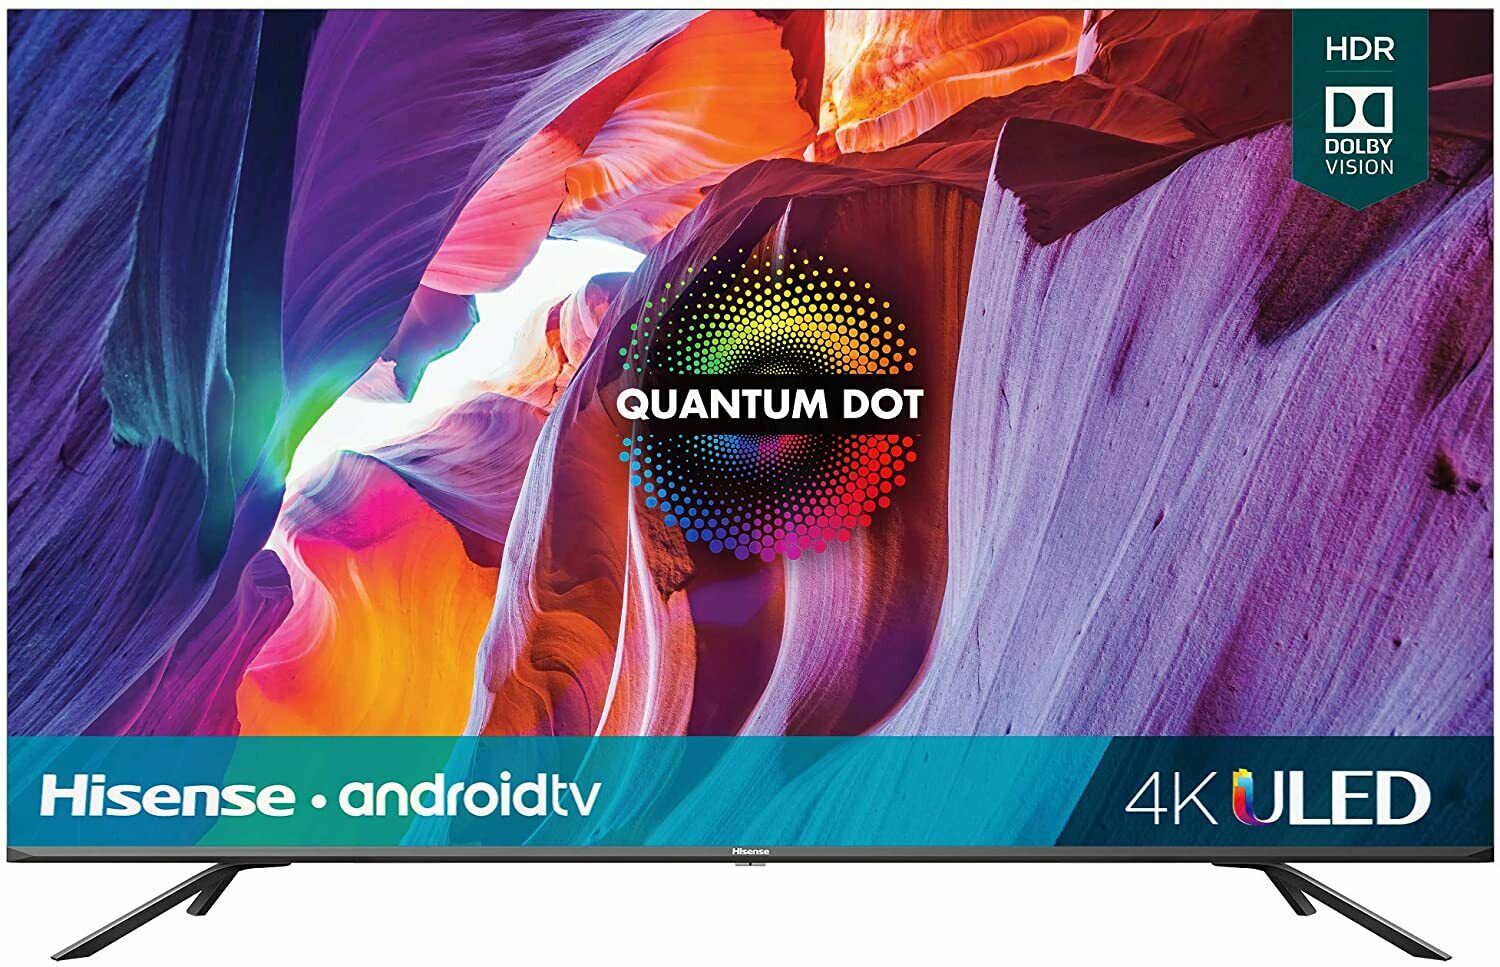 Hisense H8g 55" Quantum Series 4k Hdr Uled Android Smart Tv - 2020 Model *55h8g